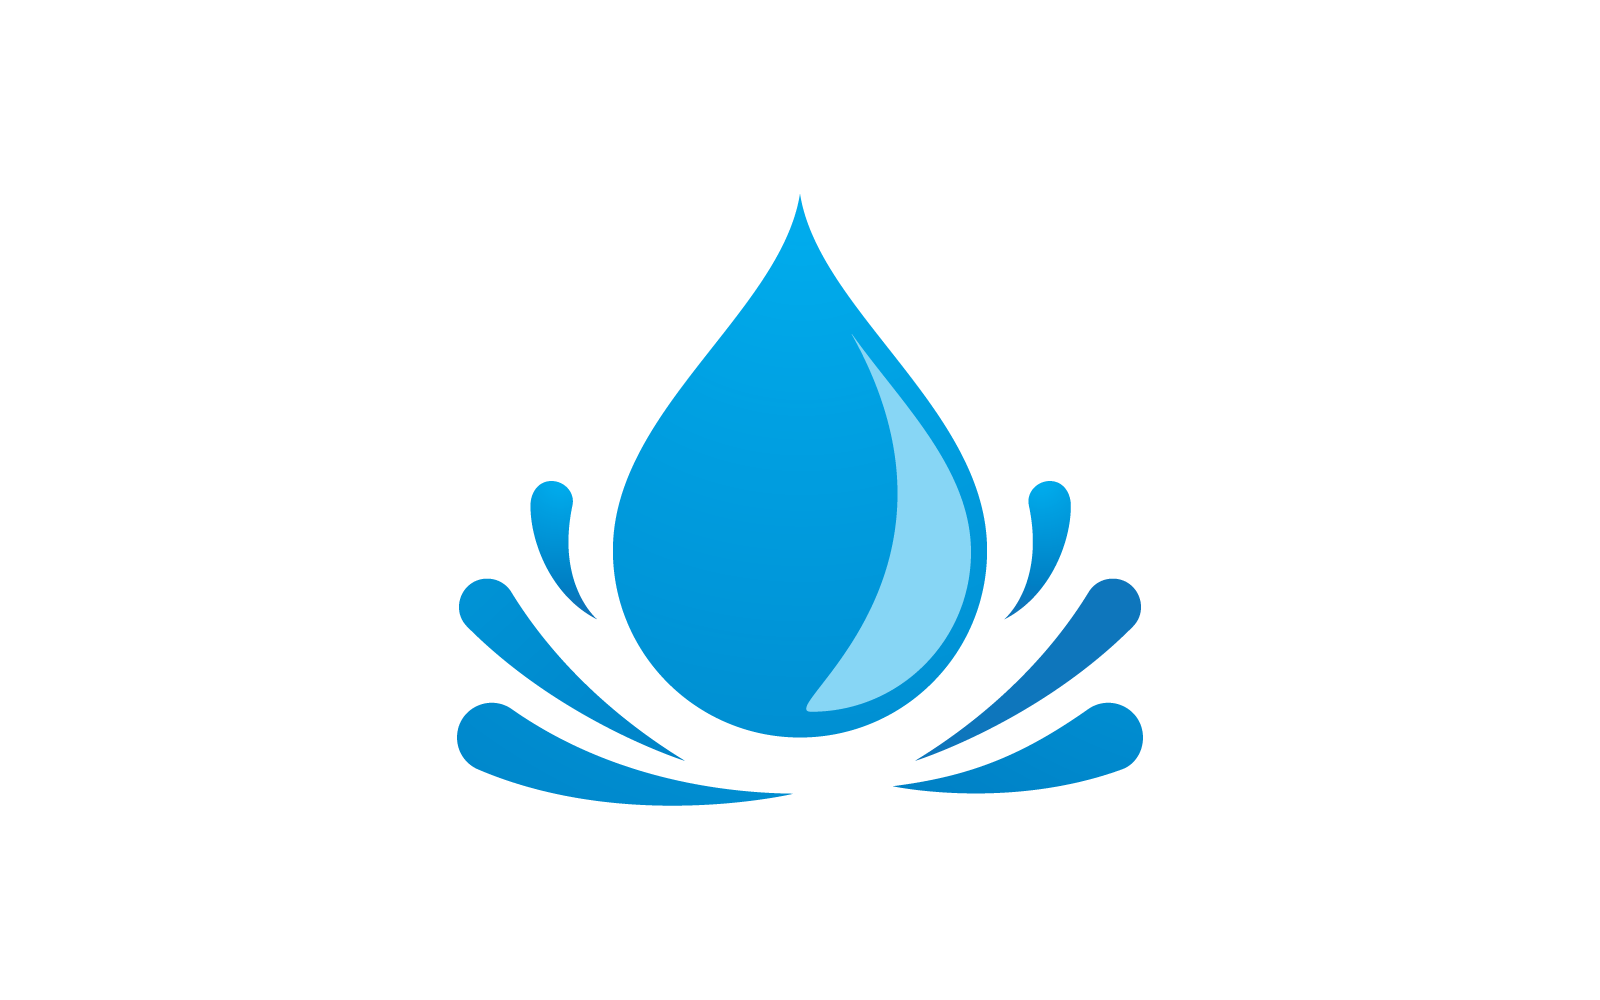 Water drop logo vector illustration